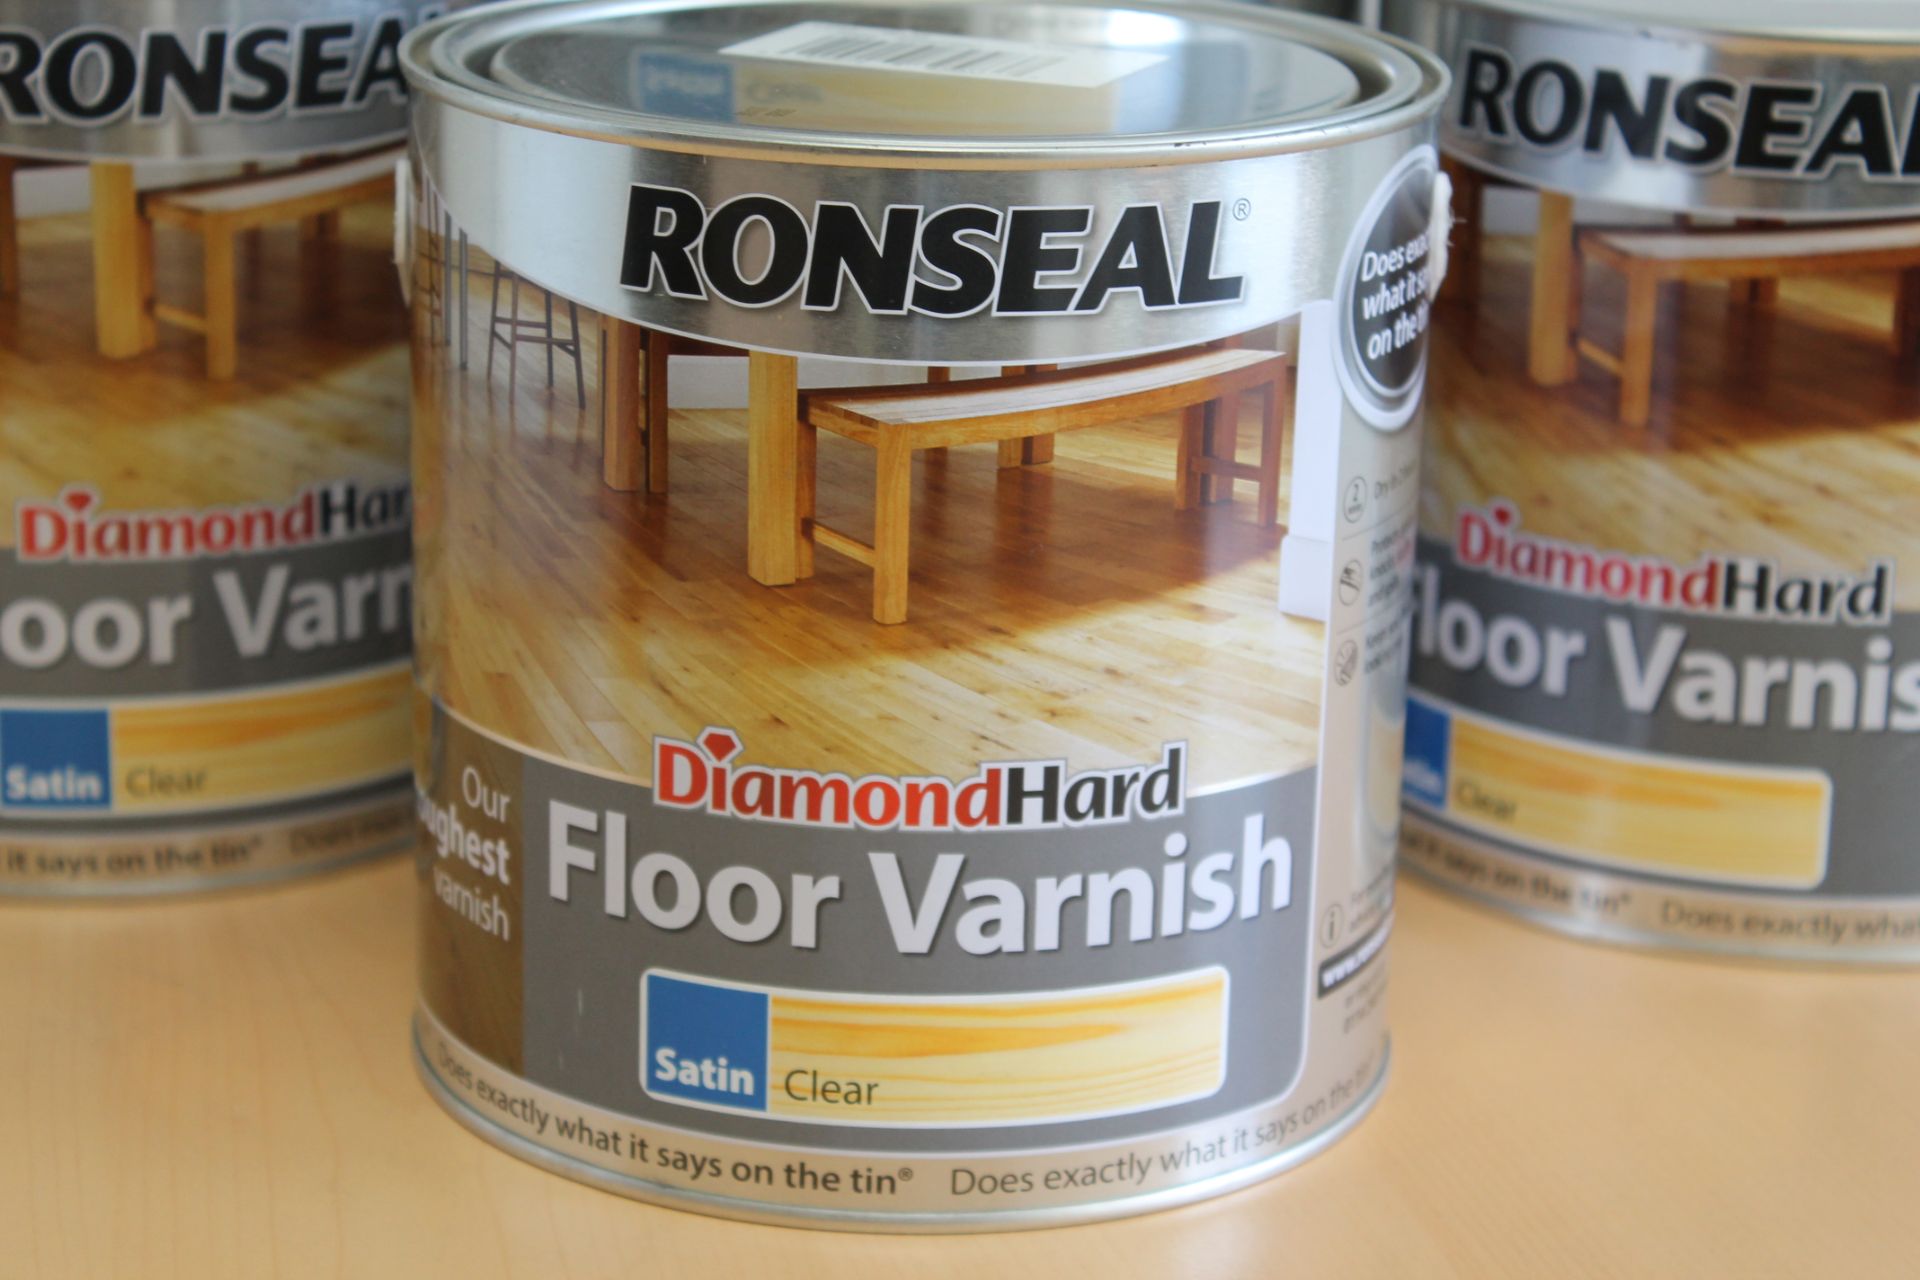 5 x 2.5L Ronseal Diamond Hard Floor Varnish (Satin Clear) - Image 2 of 2